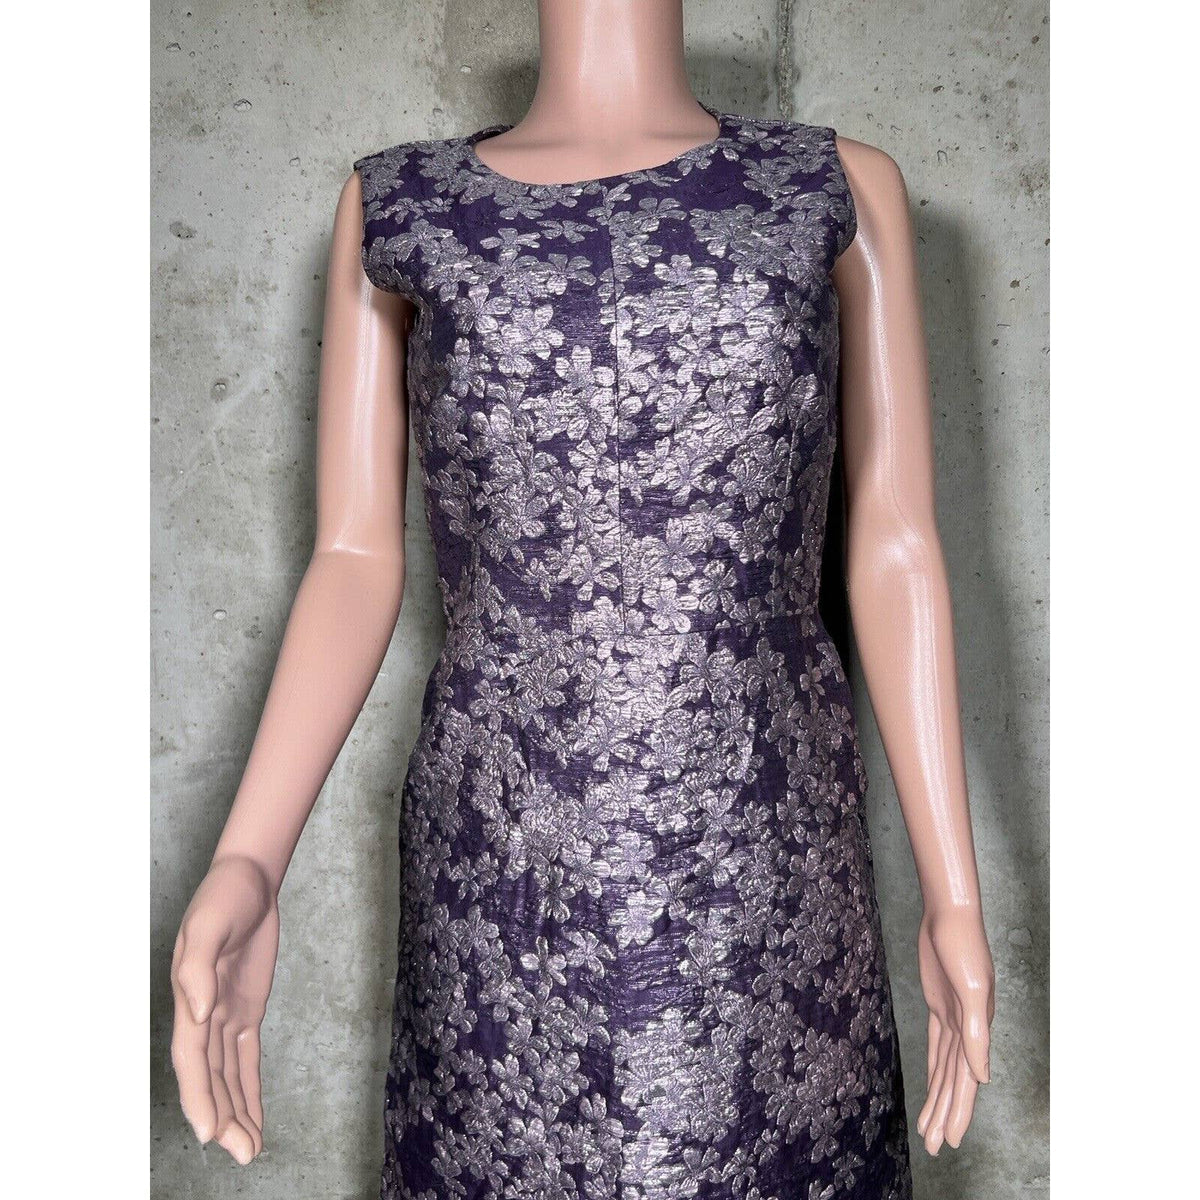 St John Black Label Purple Floral Sleeveless Dress Sz. 6